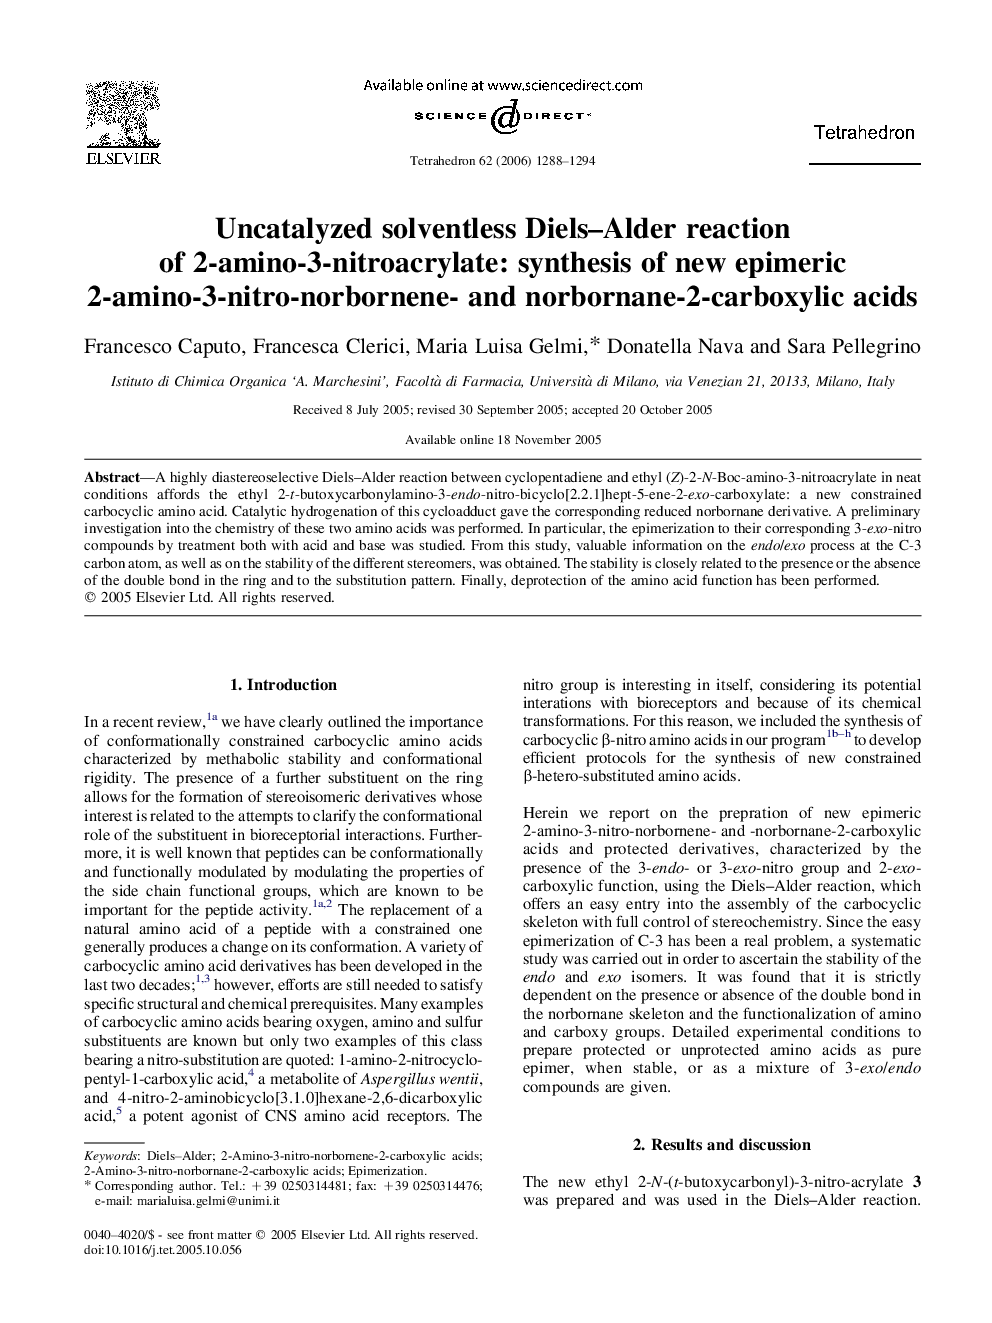 Uncatalyzed solventless Diels-Alder reaction of 2-amino-3-nitroacrylate: synthesis of new epimeric 2-amino-3-nitro-norbornene- and norbornane-2-carboxylic acids